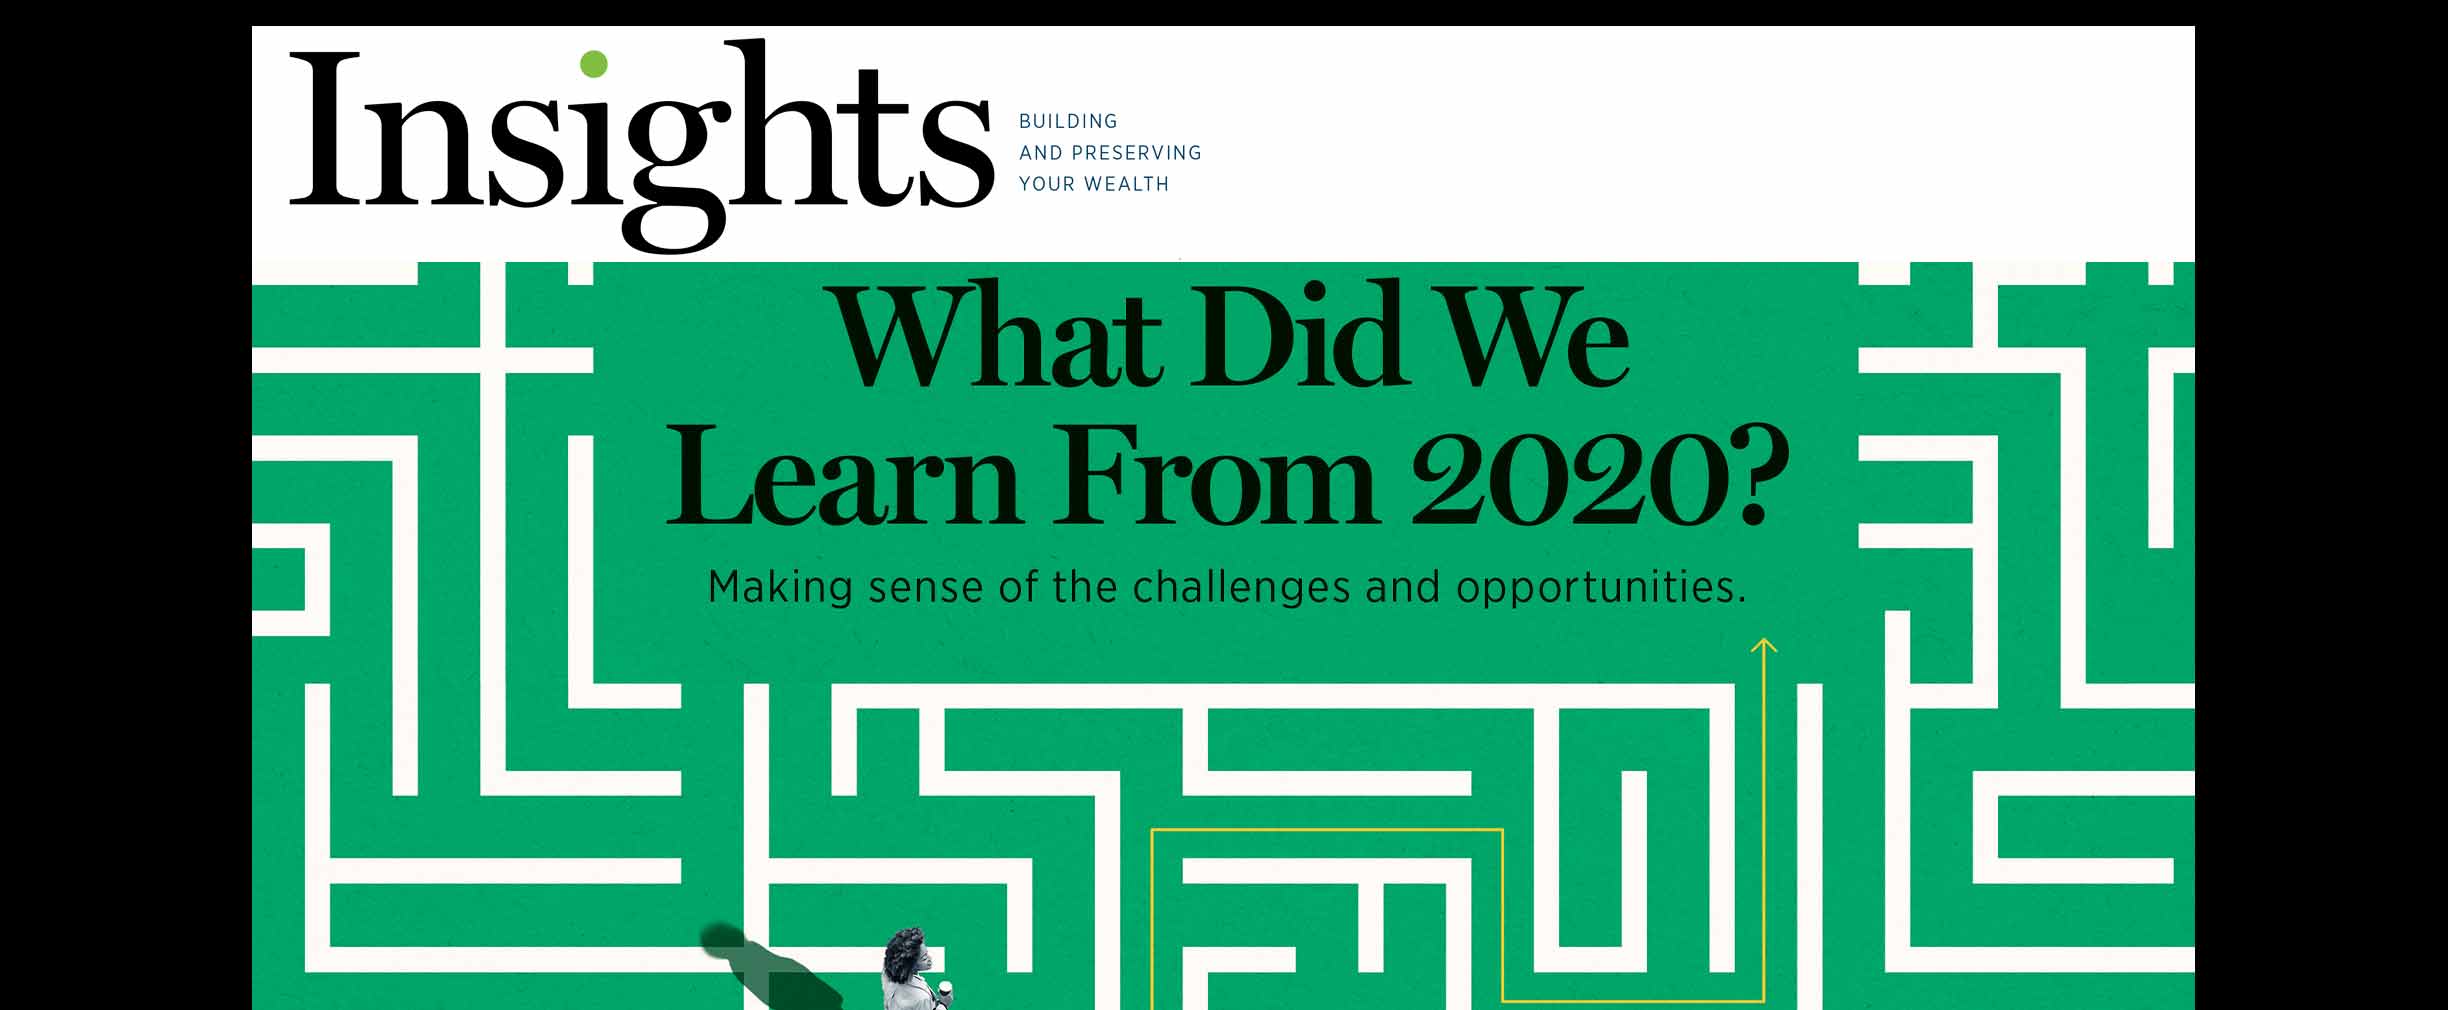 Insights Magazine Winter 2021 Cover